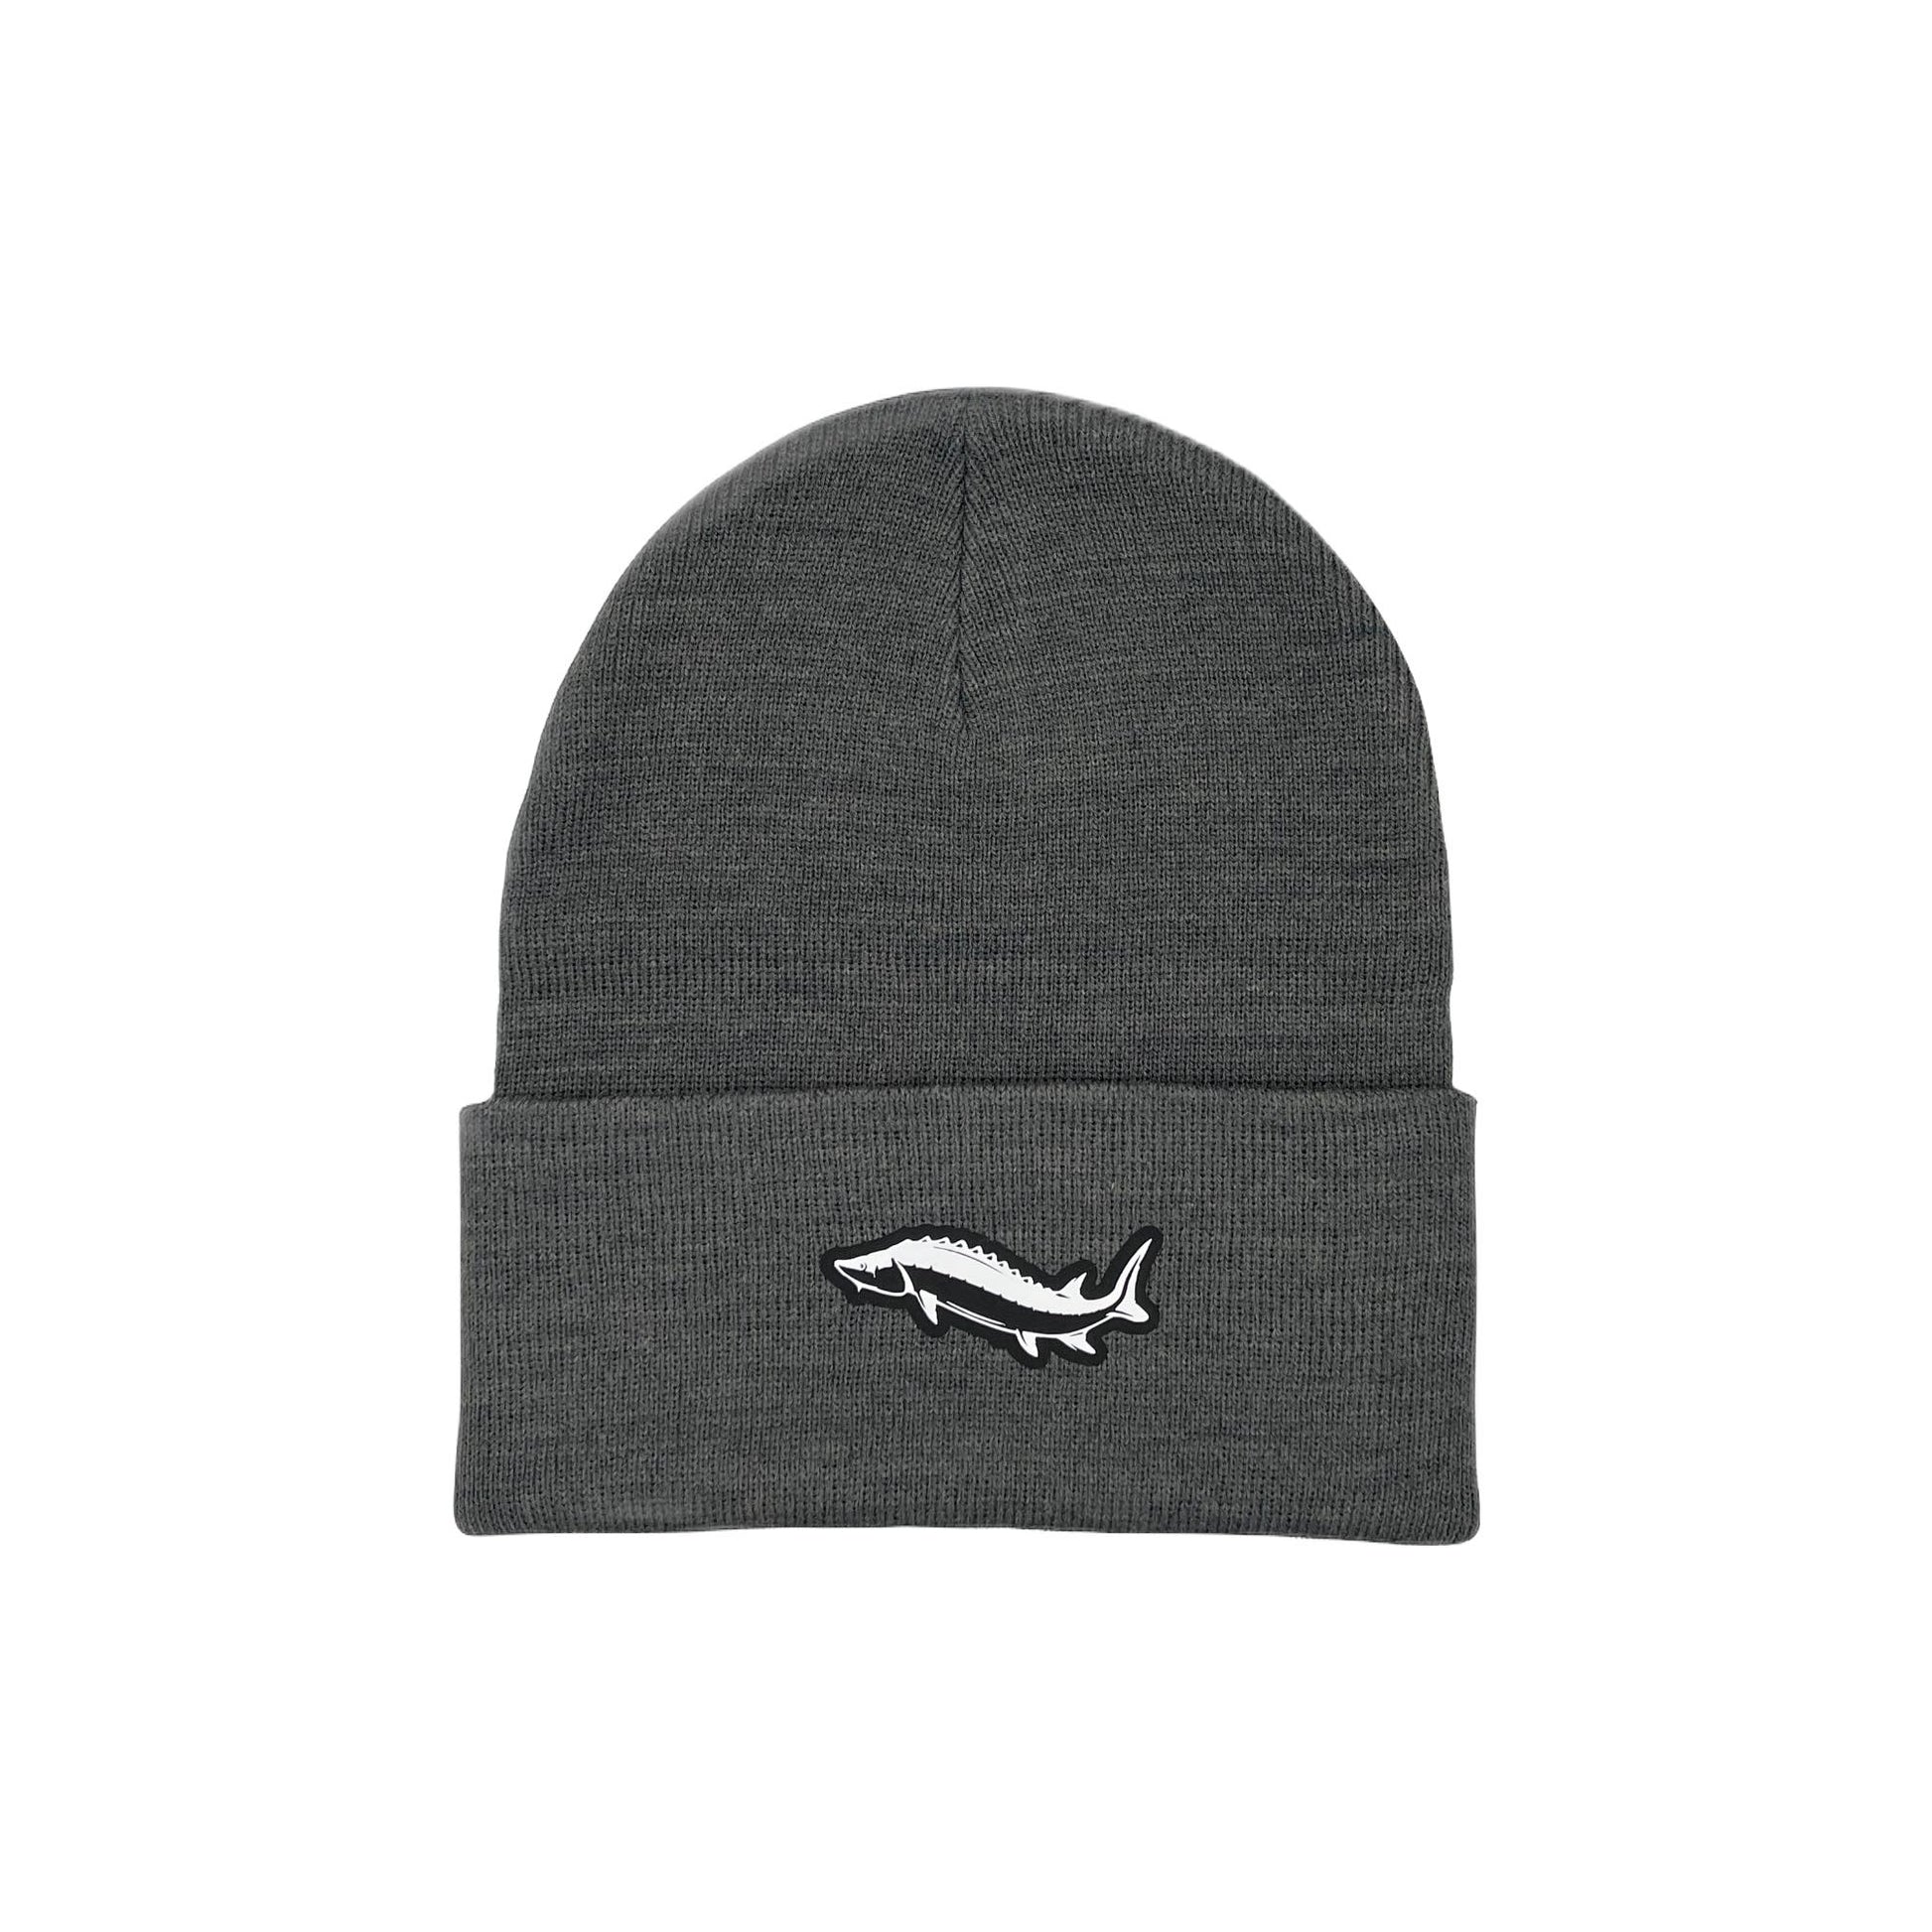 Sturgeon Dark Gray Winter Cuffed Knit Hat | Fish | Fishing | Beanie 